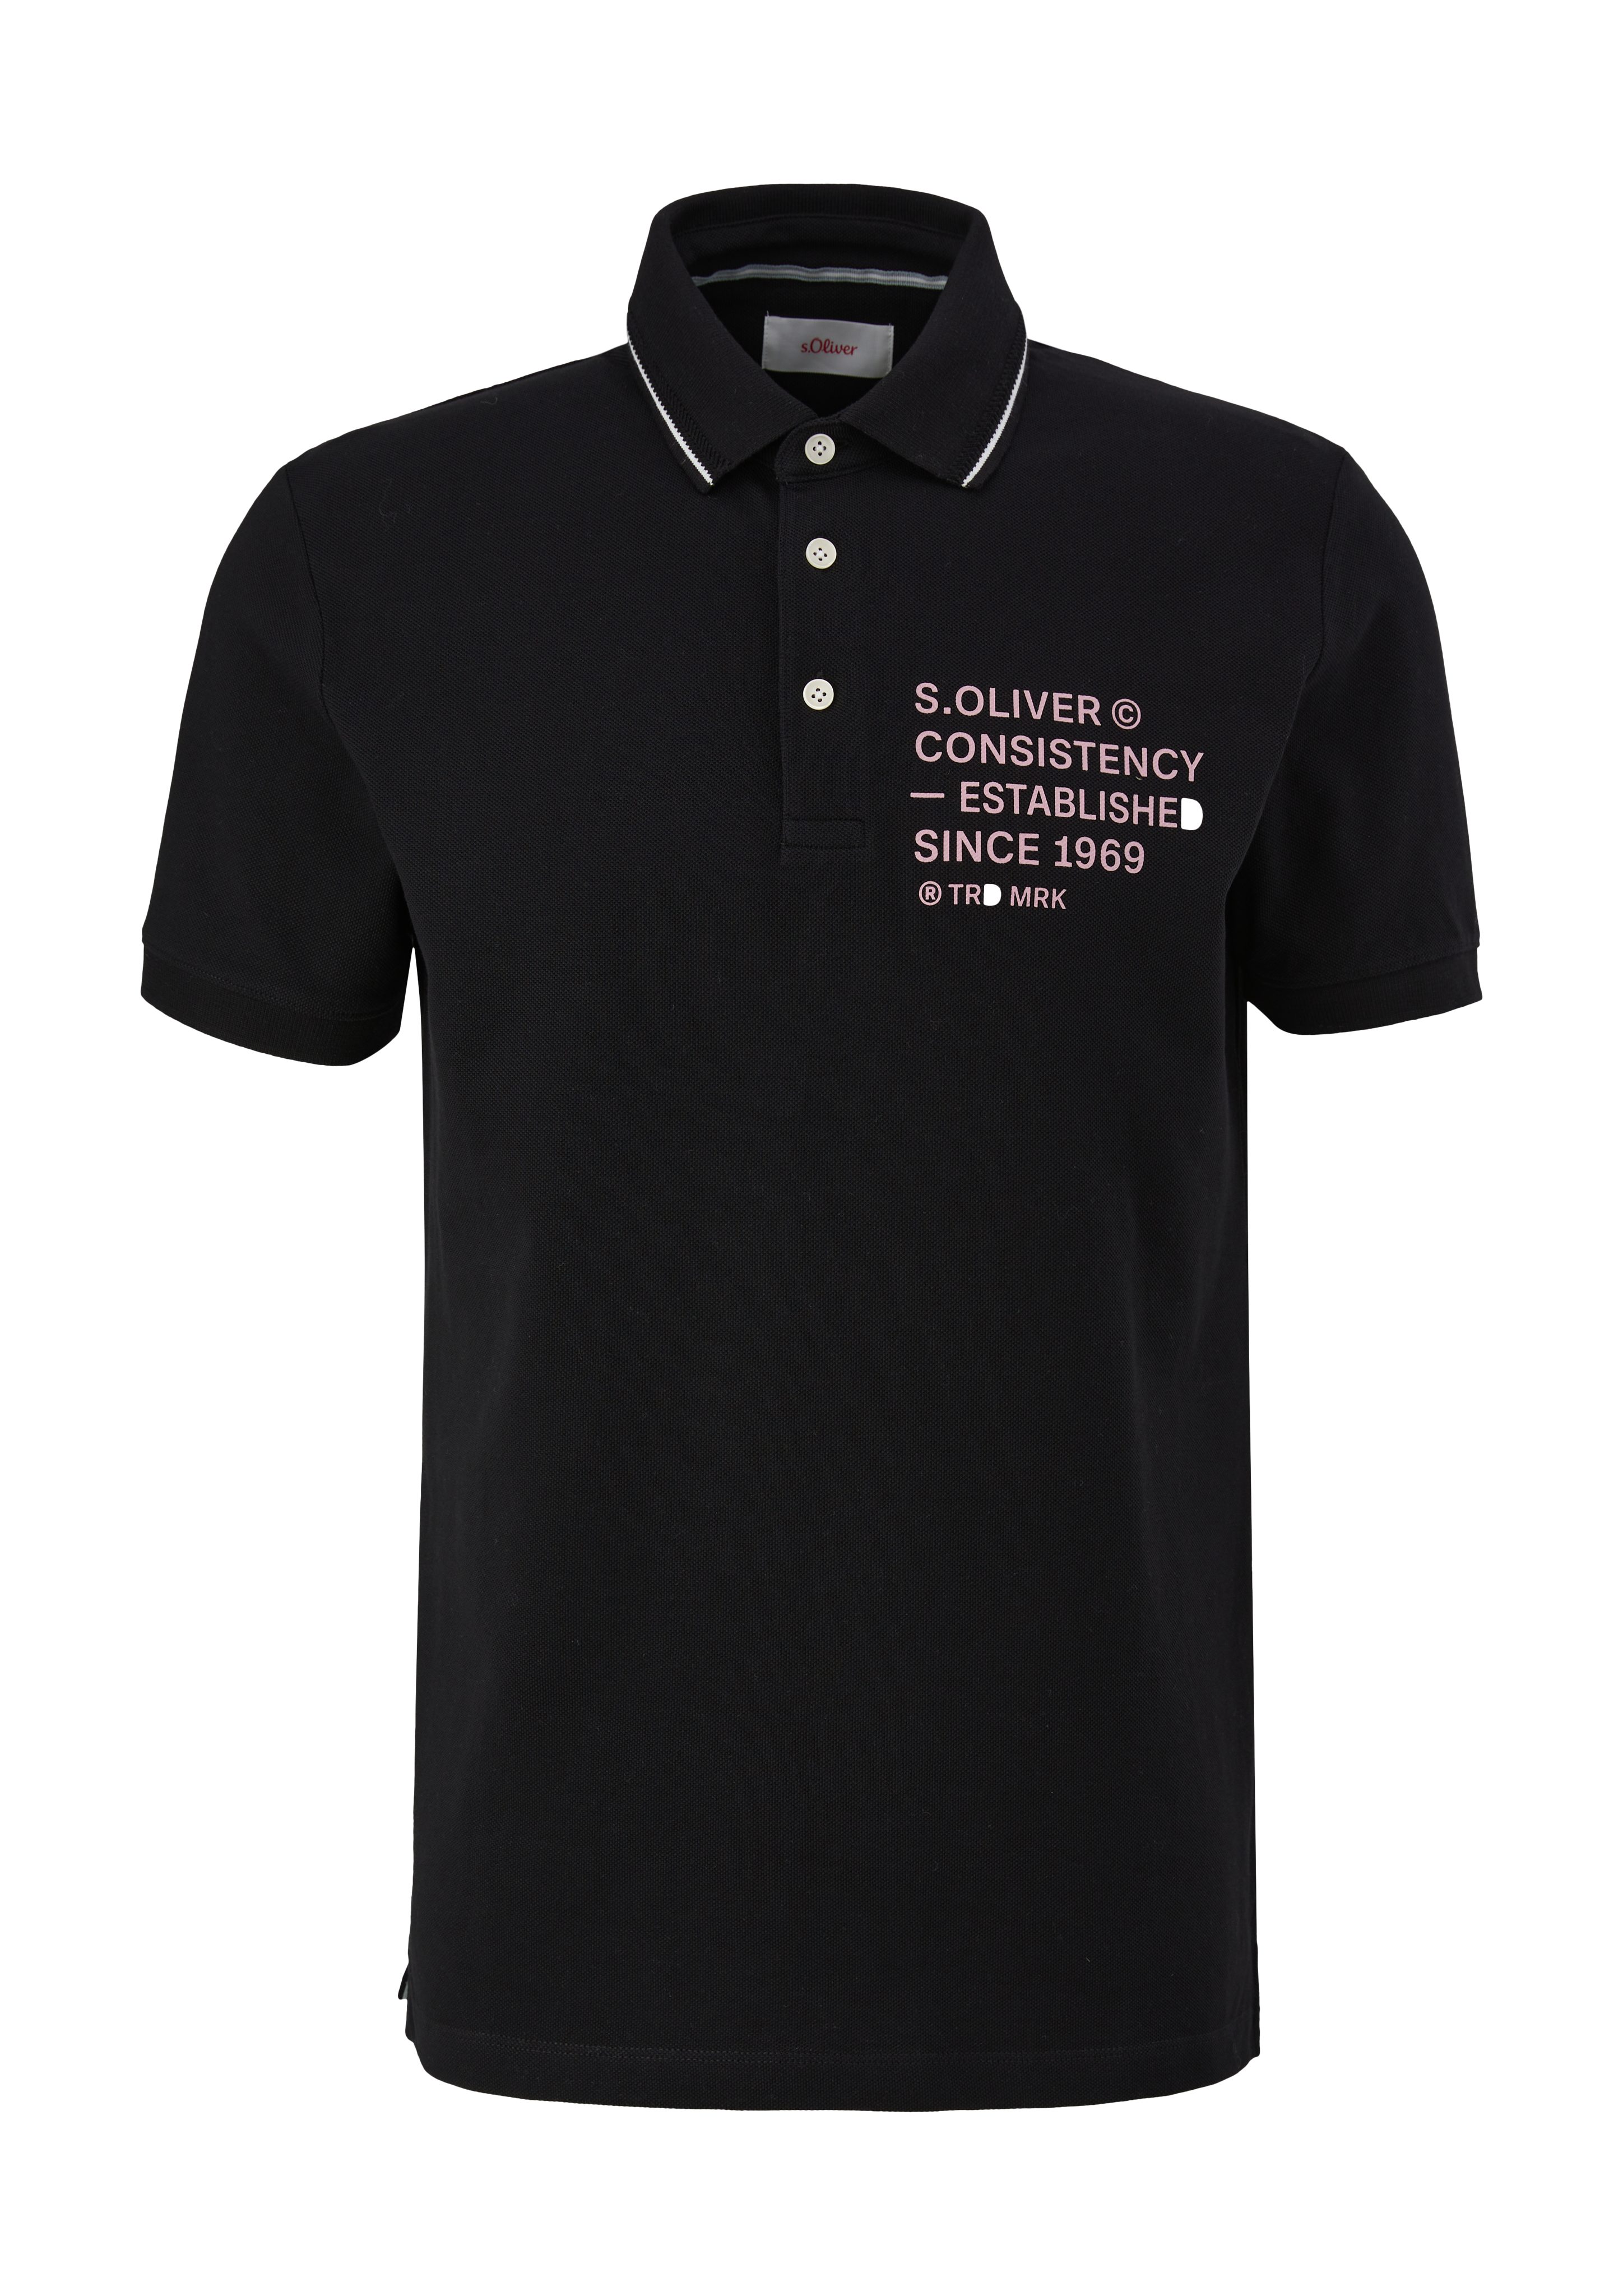 s.Oliver Blende Poloshirt Piquéstruktur mit Kurzarmshirt Artwork, schwarz